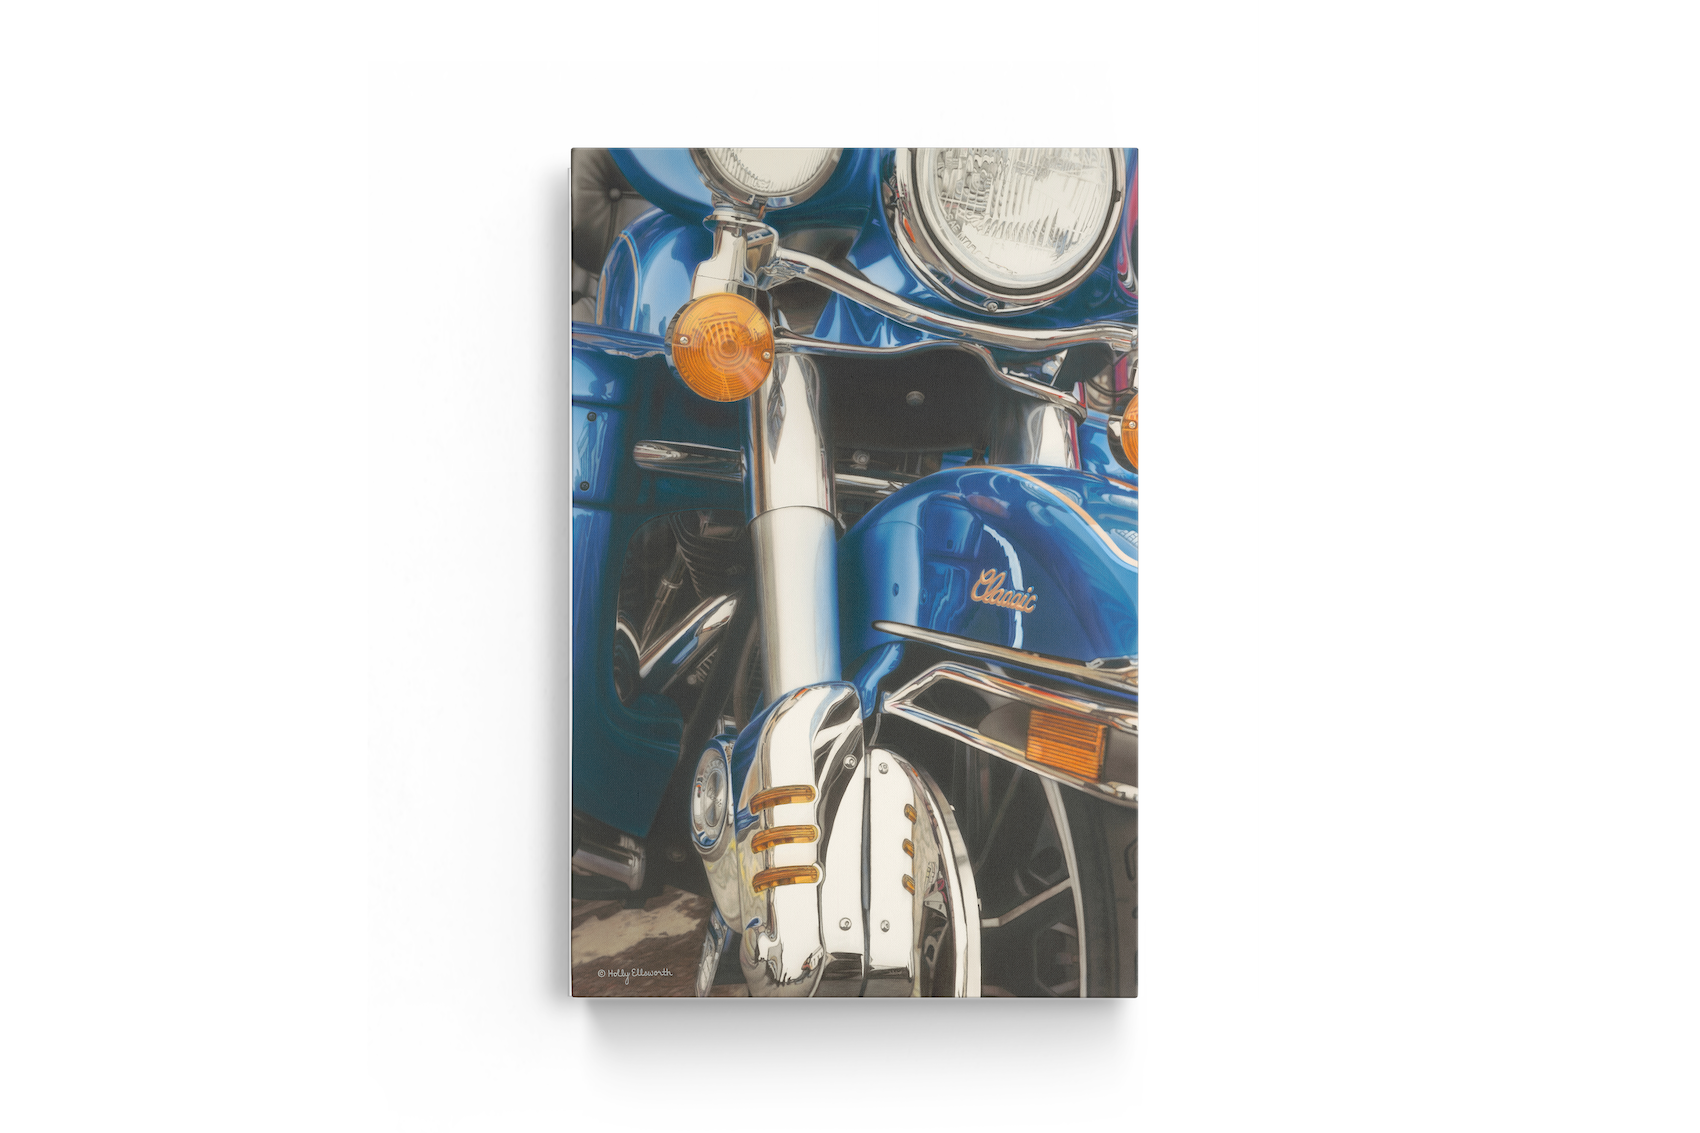 Harley Davidson Painting | Harley Art | Harley Davidson Wall Art | Harley Davidson Gifts